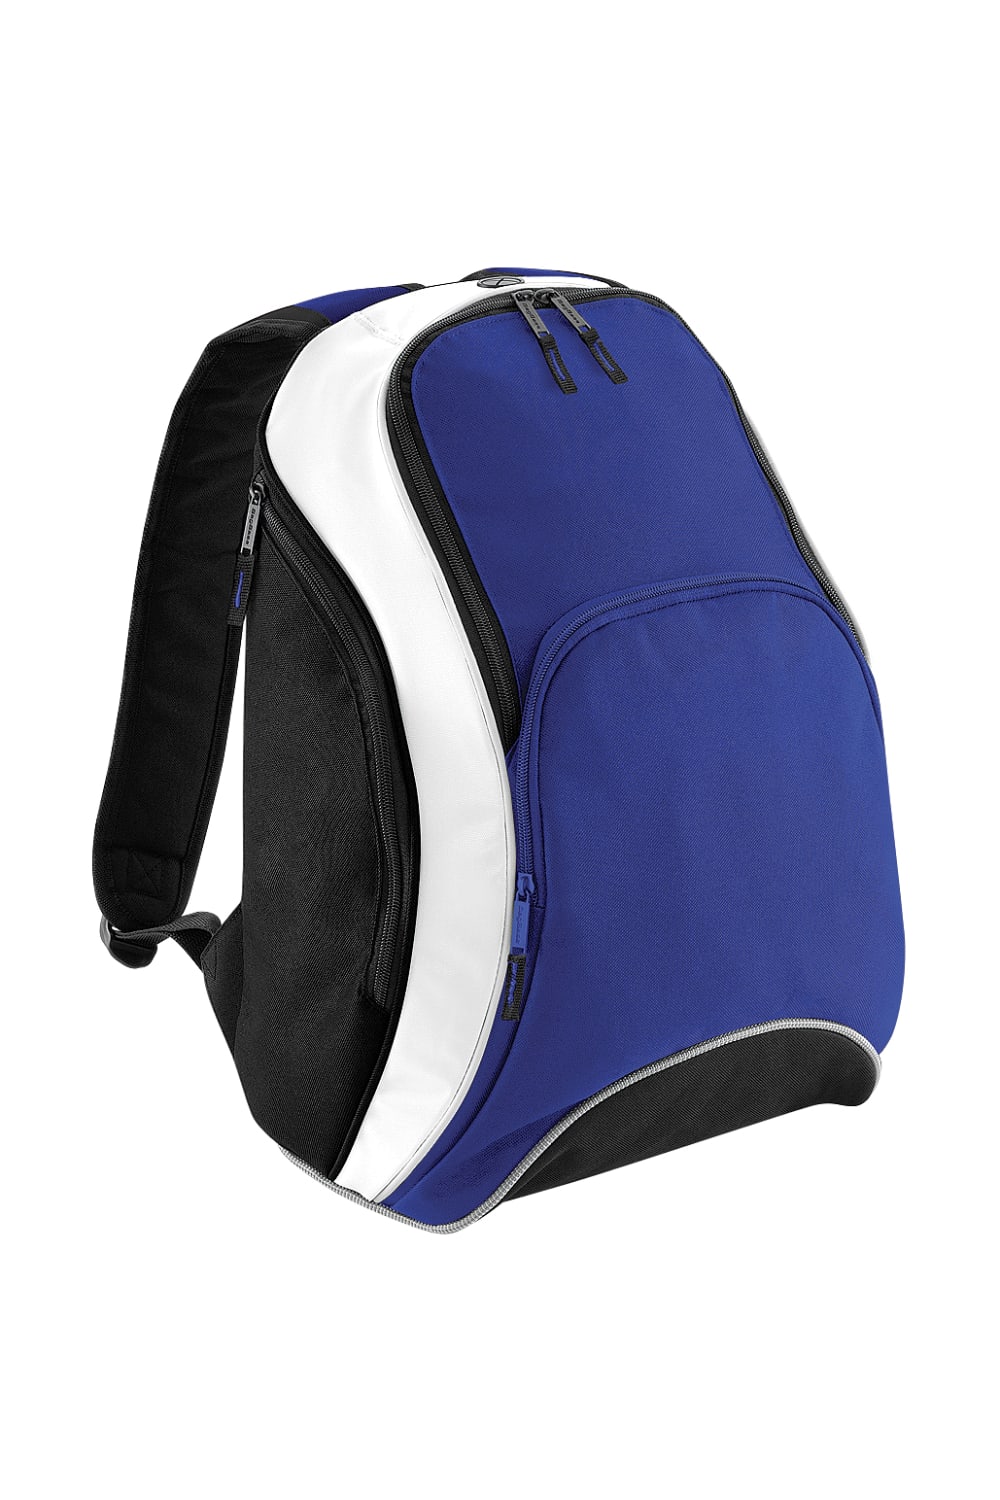 Bagbase Teamwear Backpack / Rucksack (21 Liters) (Pack of 2) (Bright Royal/Black/White) (One Size)